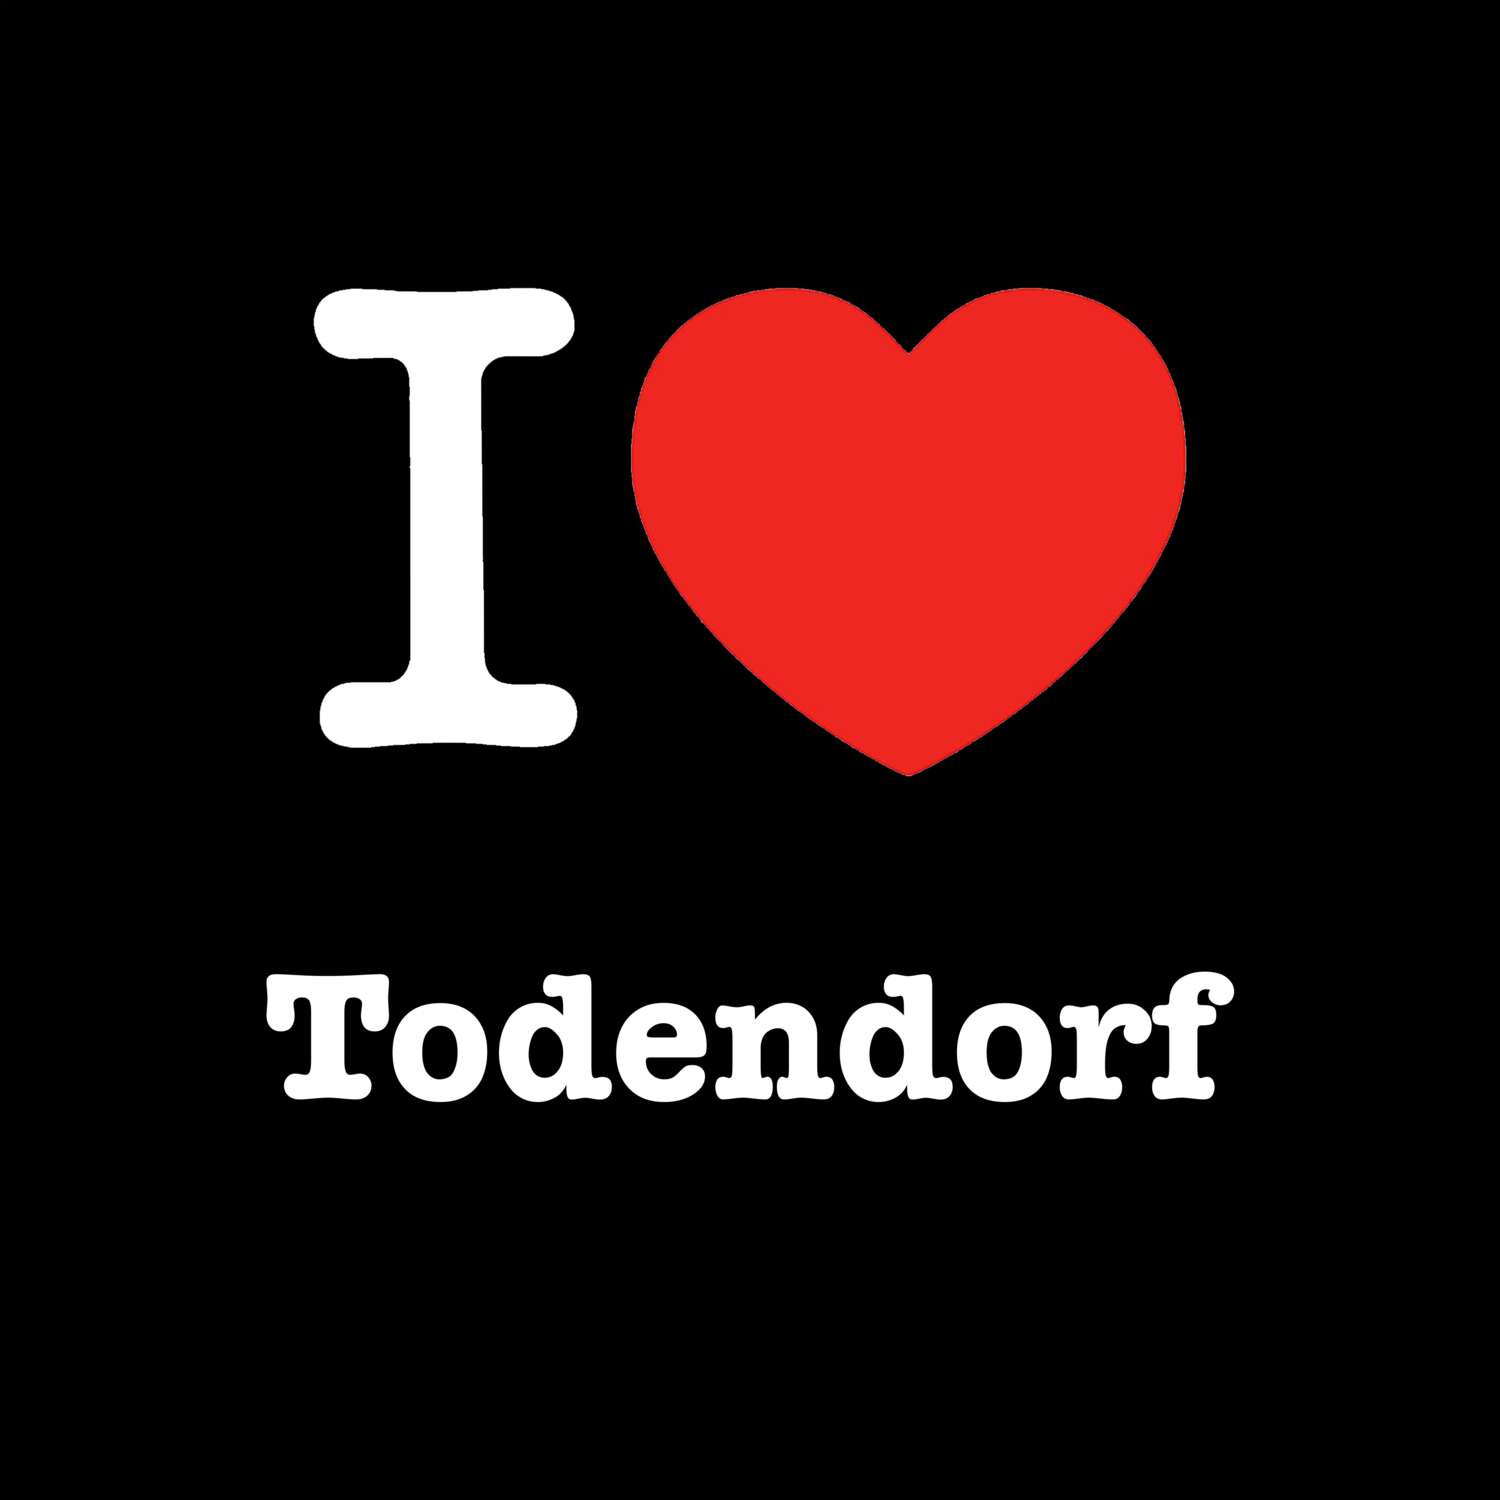 Todendorf T-Shirt »I love«